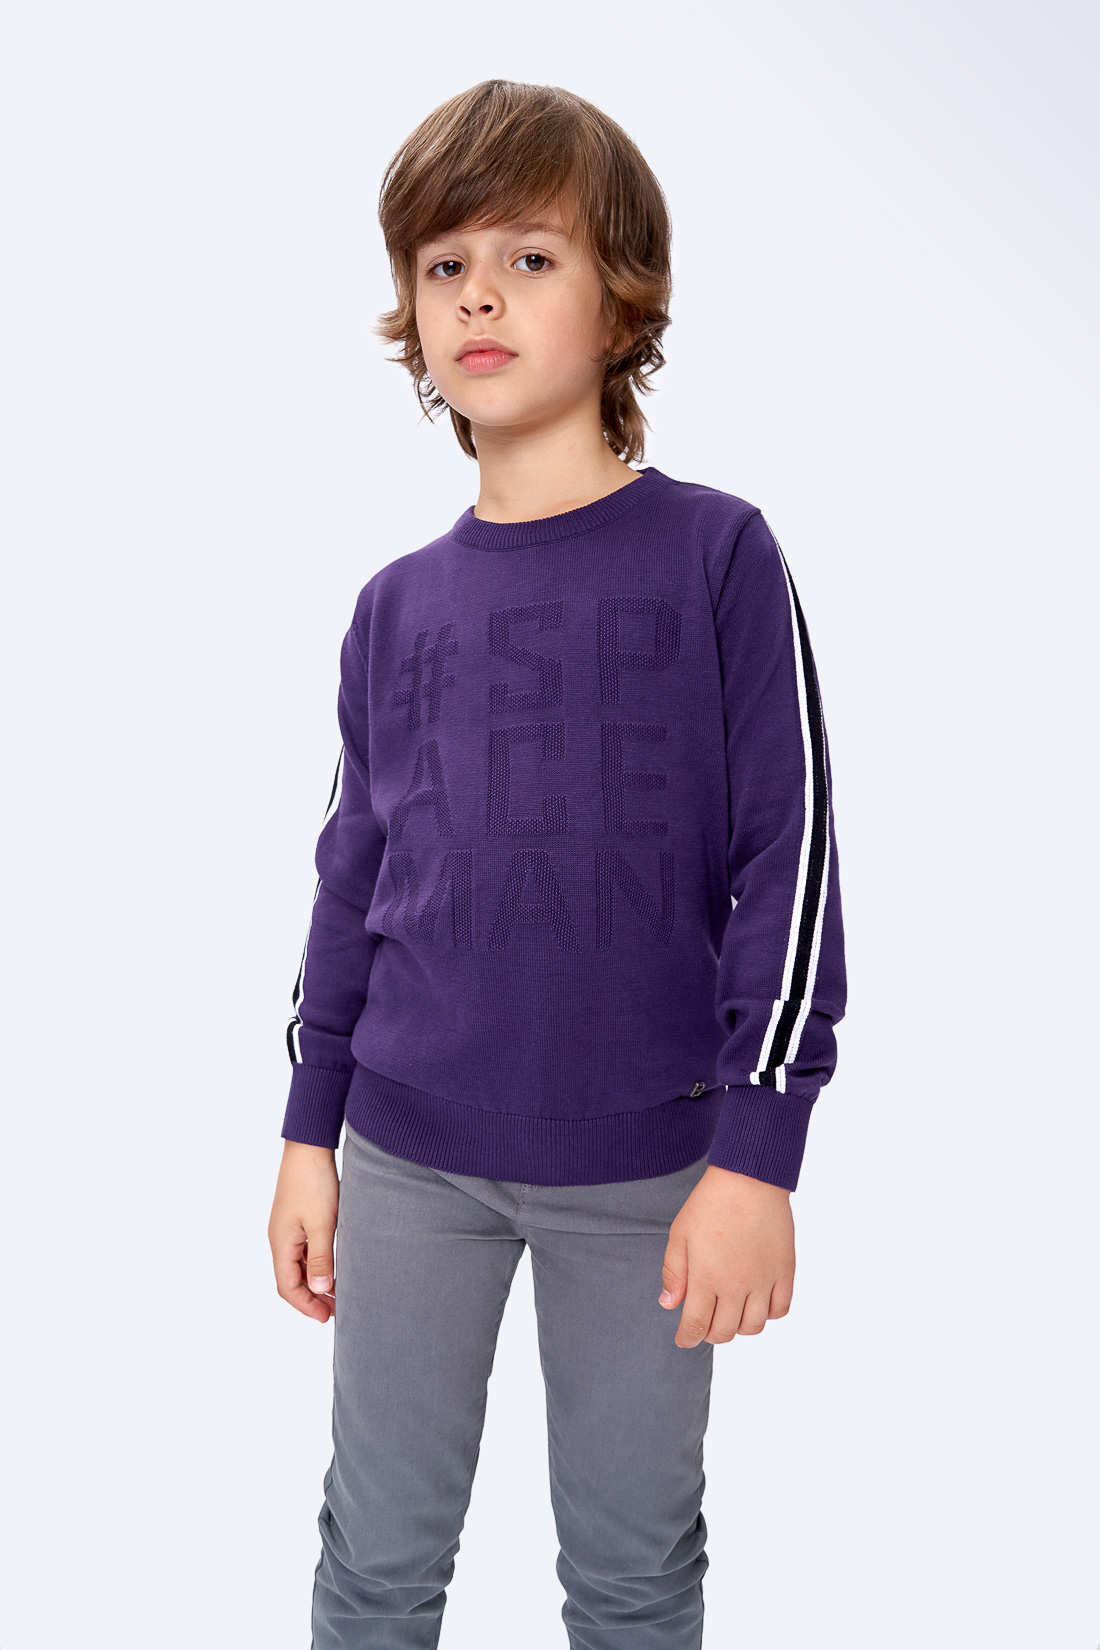 Джемпер для мальчика (арт. baon BK639503), размер 146, цвет фиолетовый